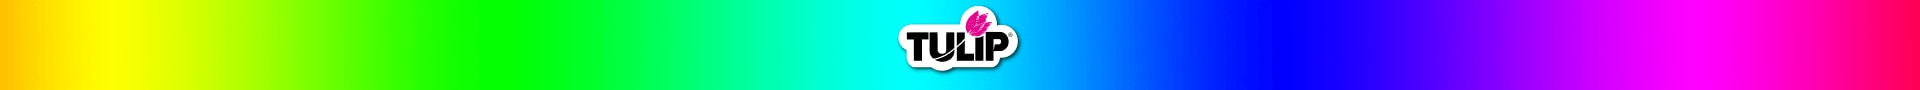 Tulip tie dye kits logo